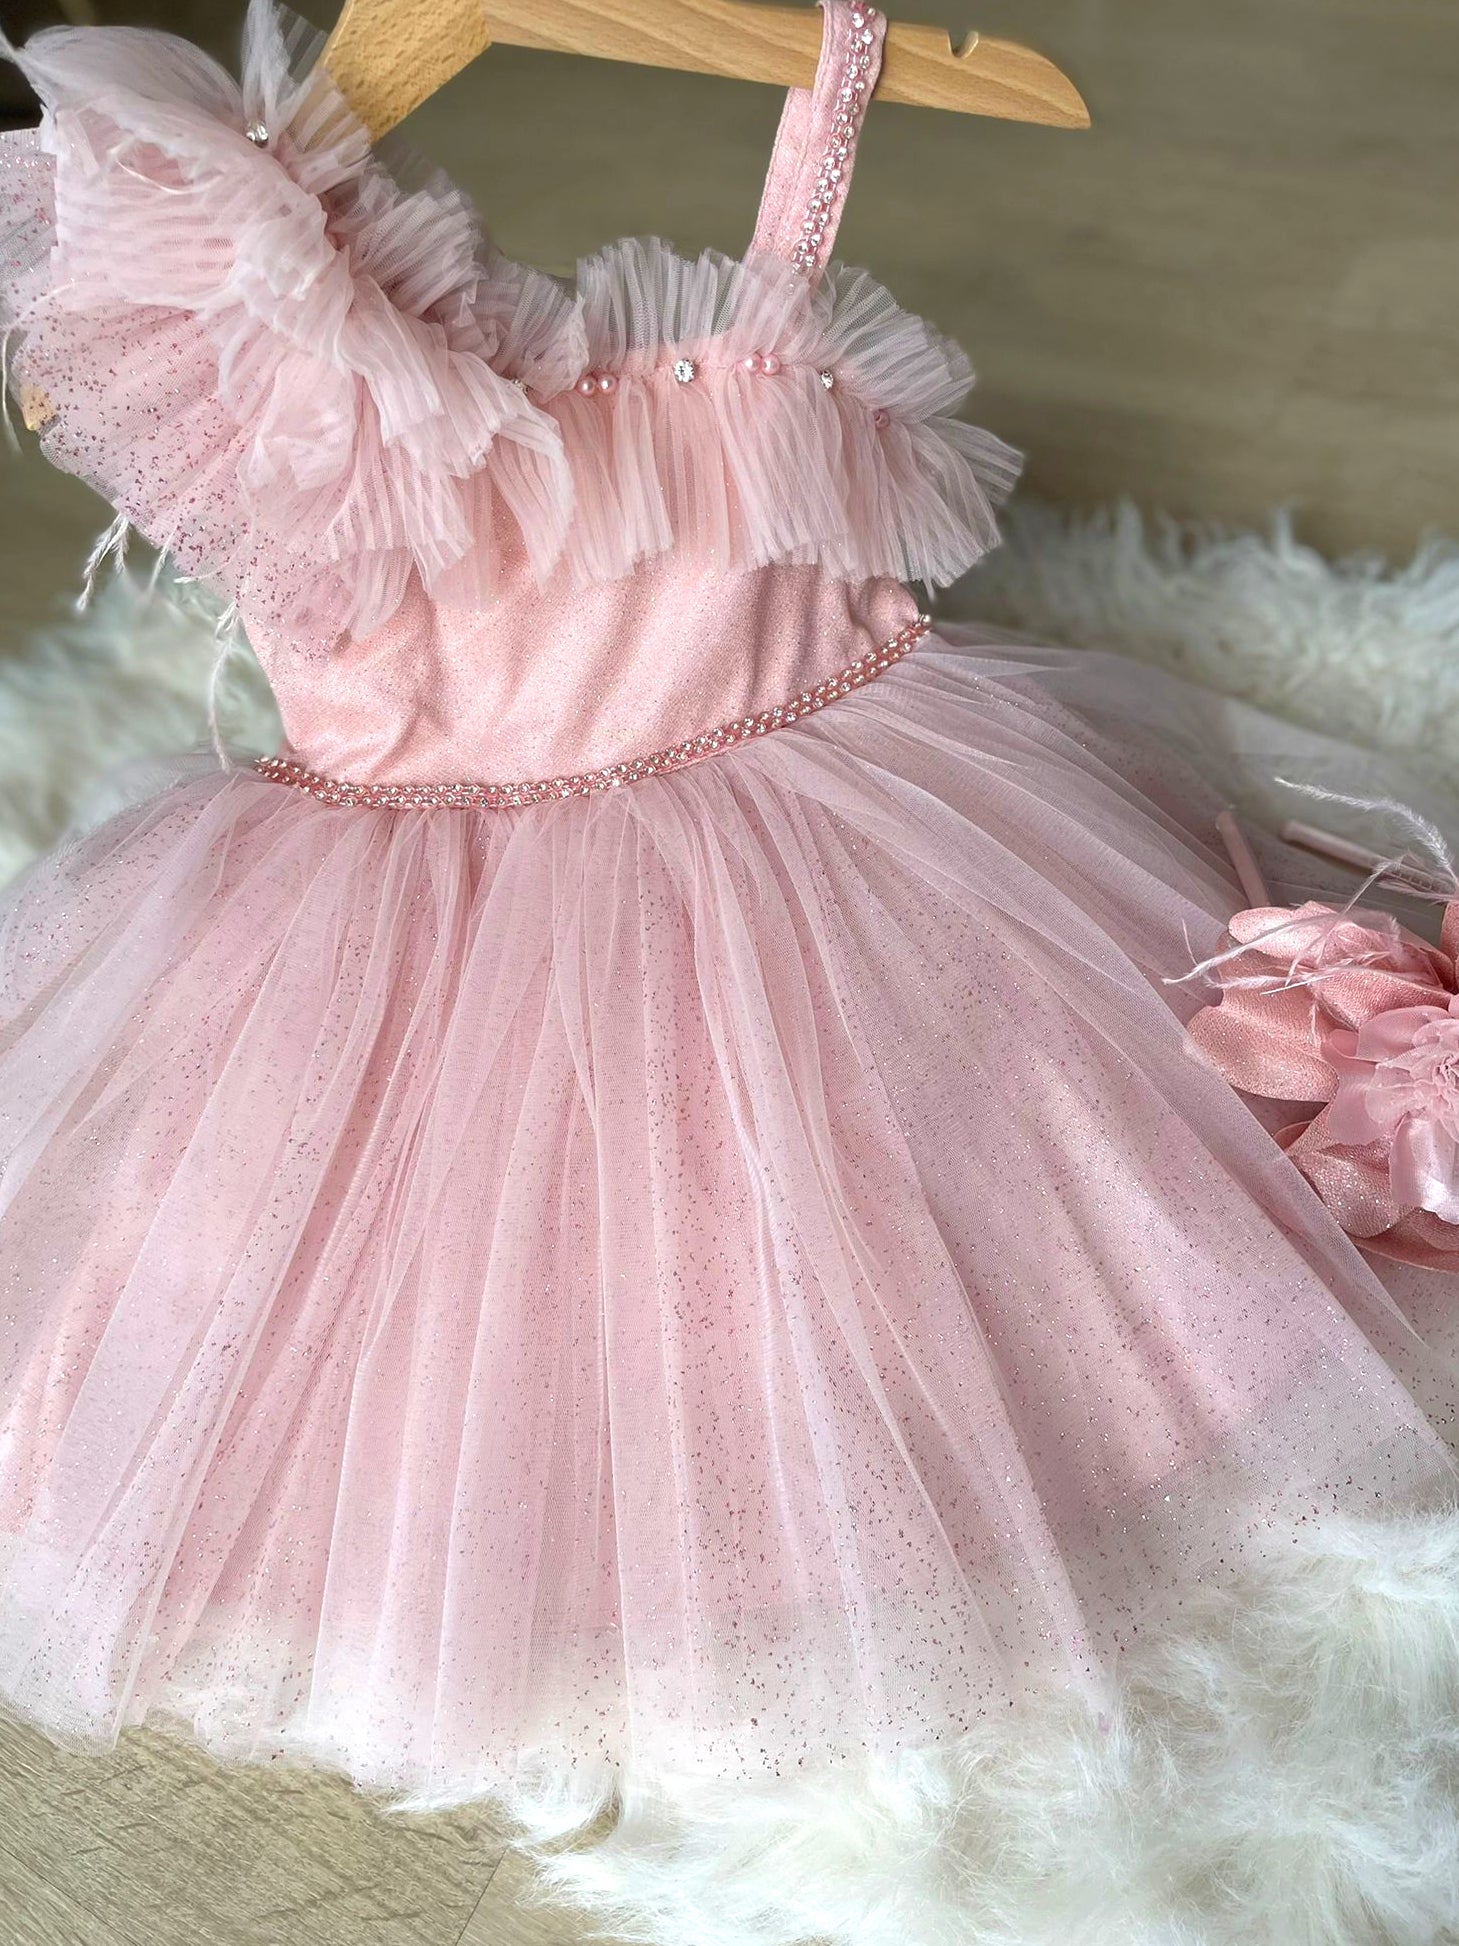 Rochie roz de ocazie pentru fete + bentiță CADOU (produs în stoc)